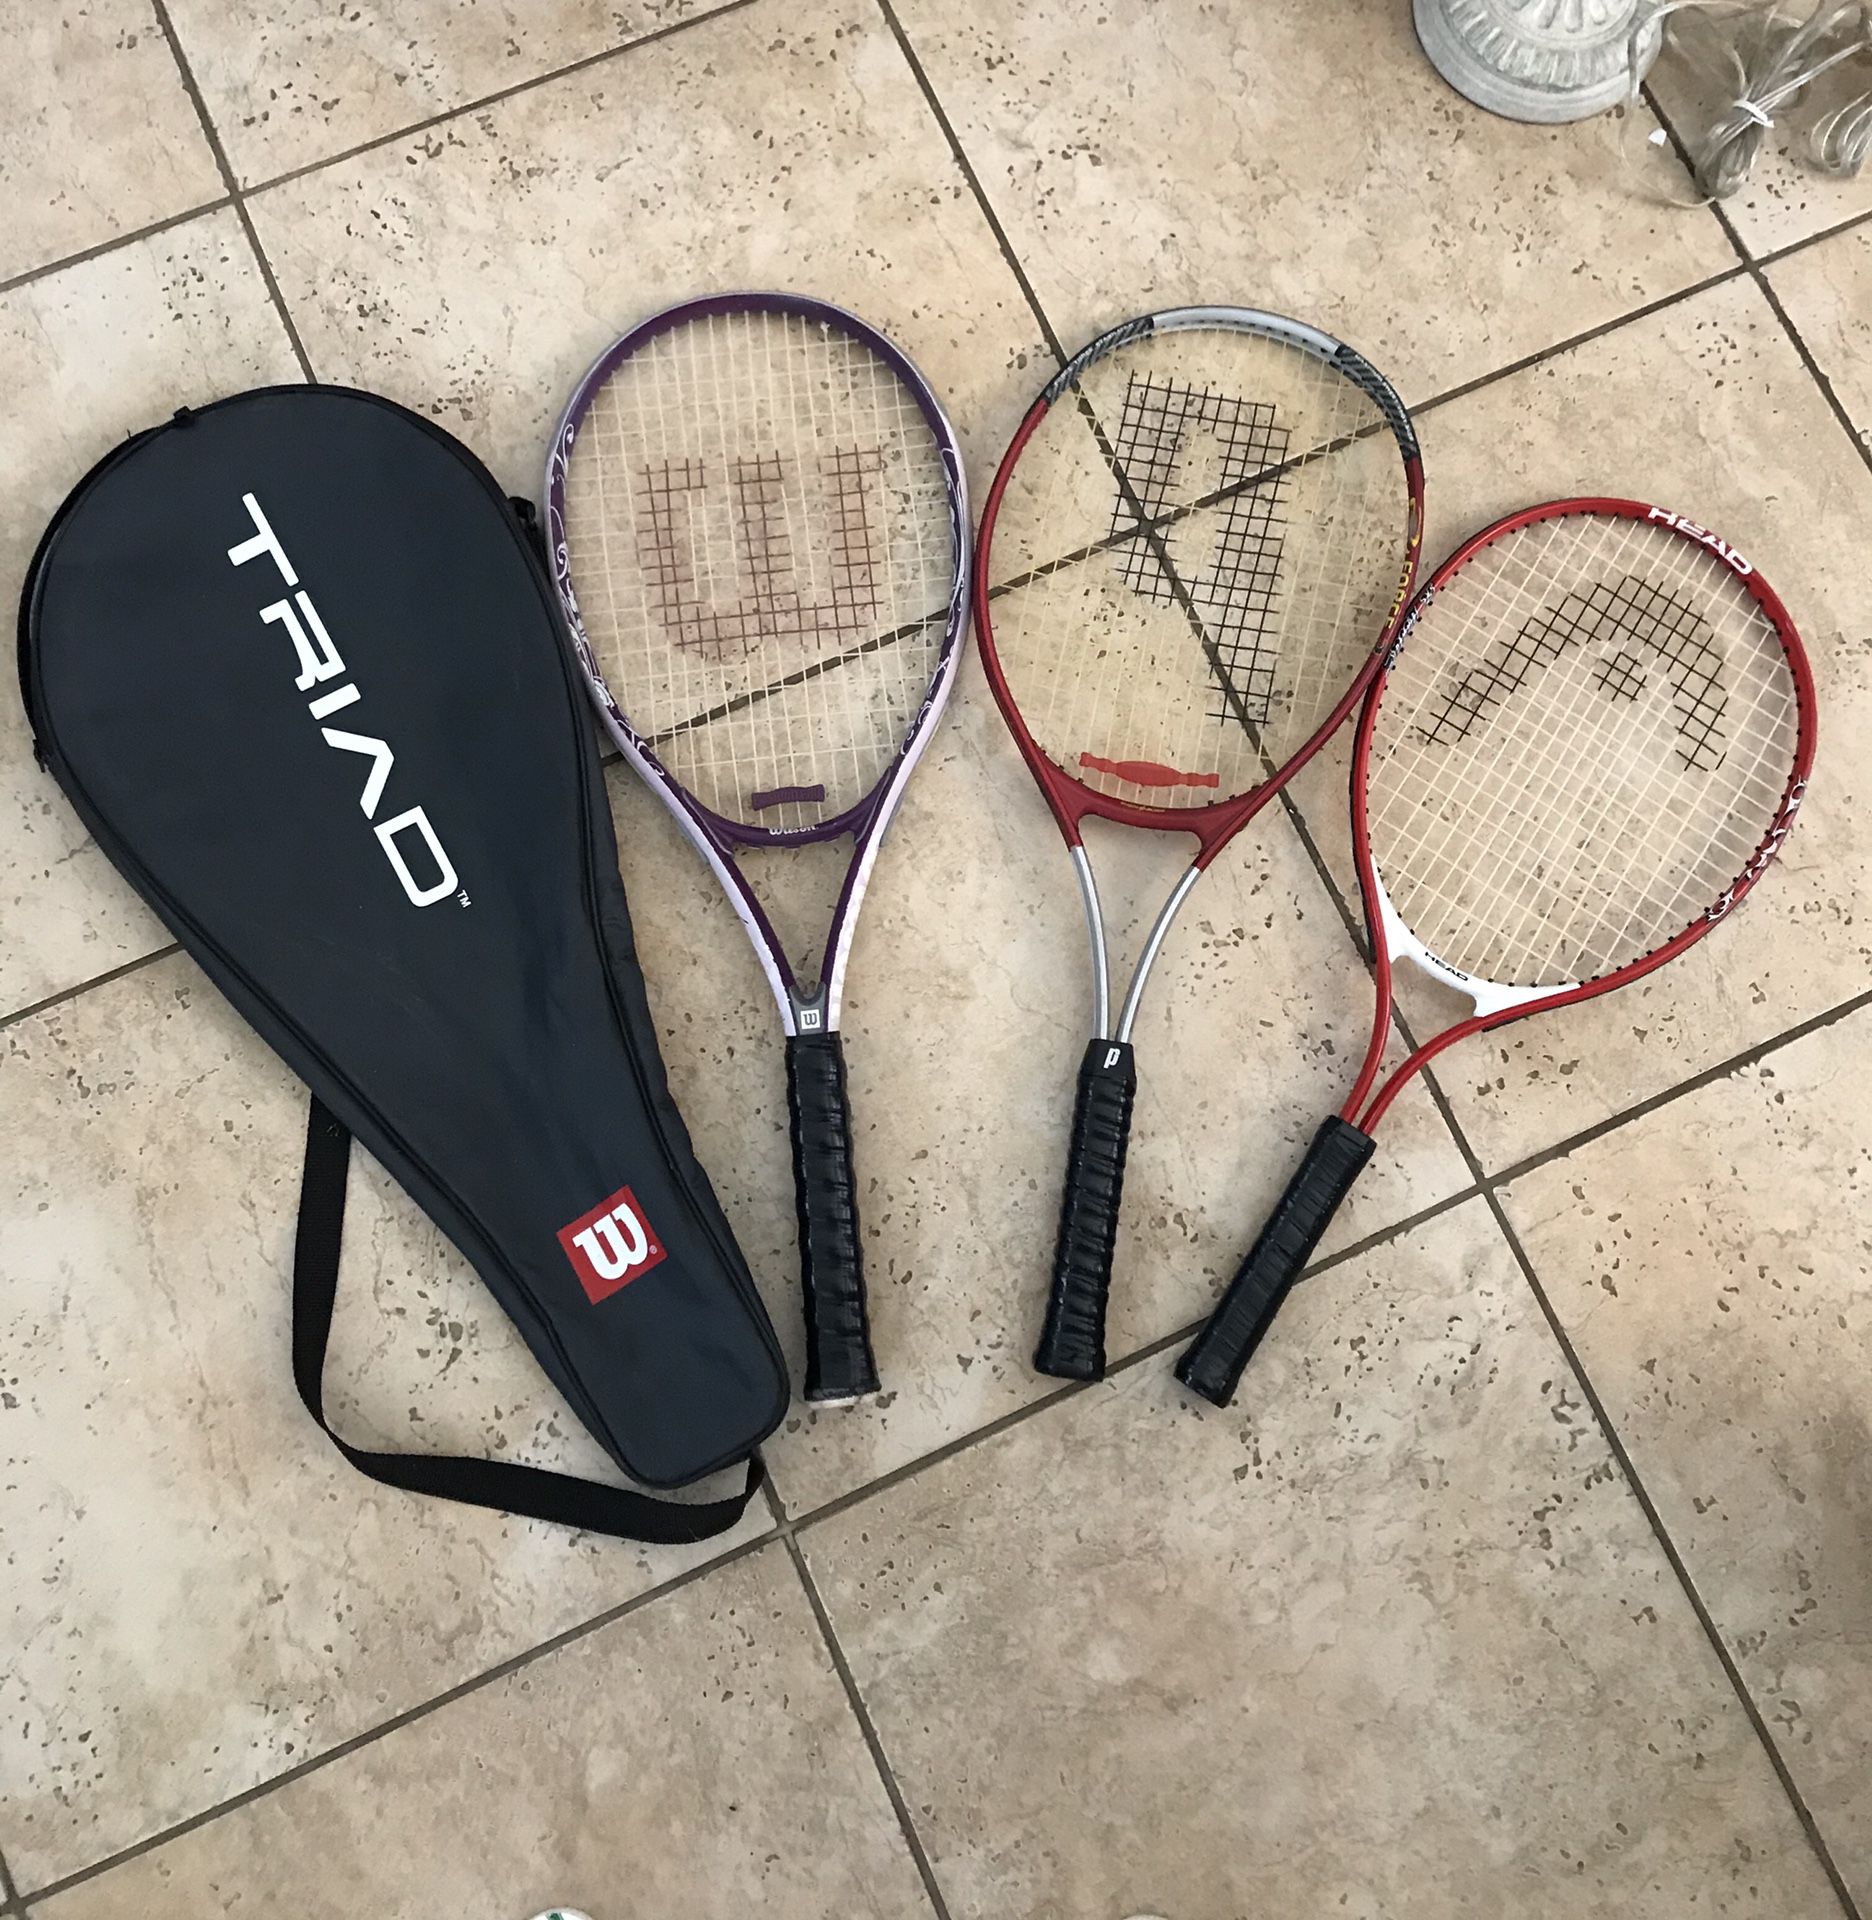 Tennis rackets Wilson, Prince, Head ti